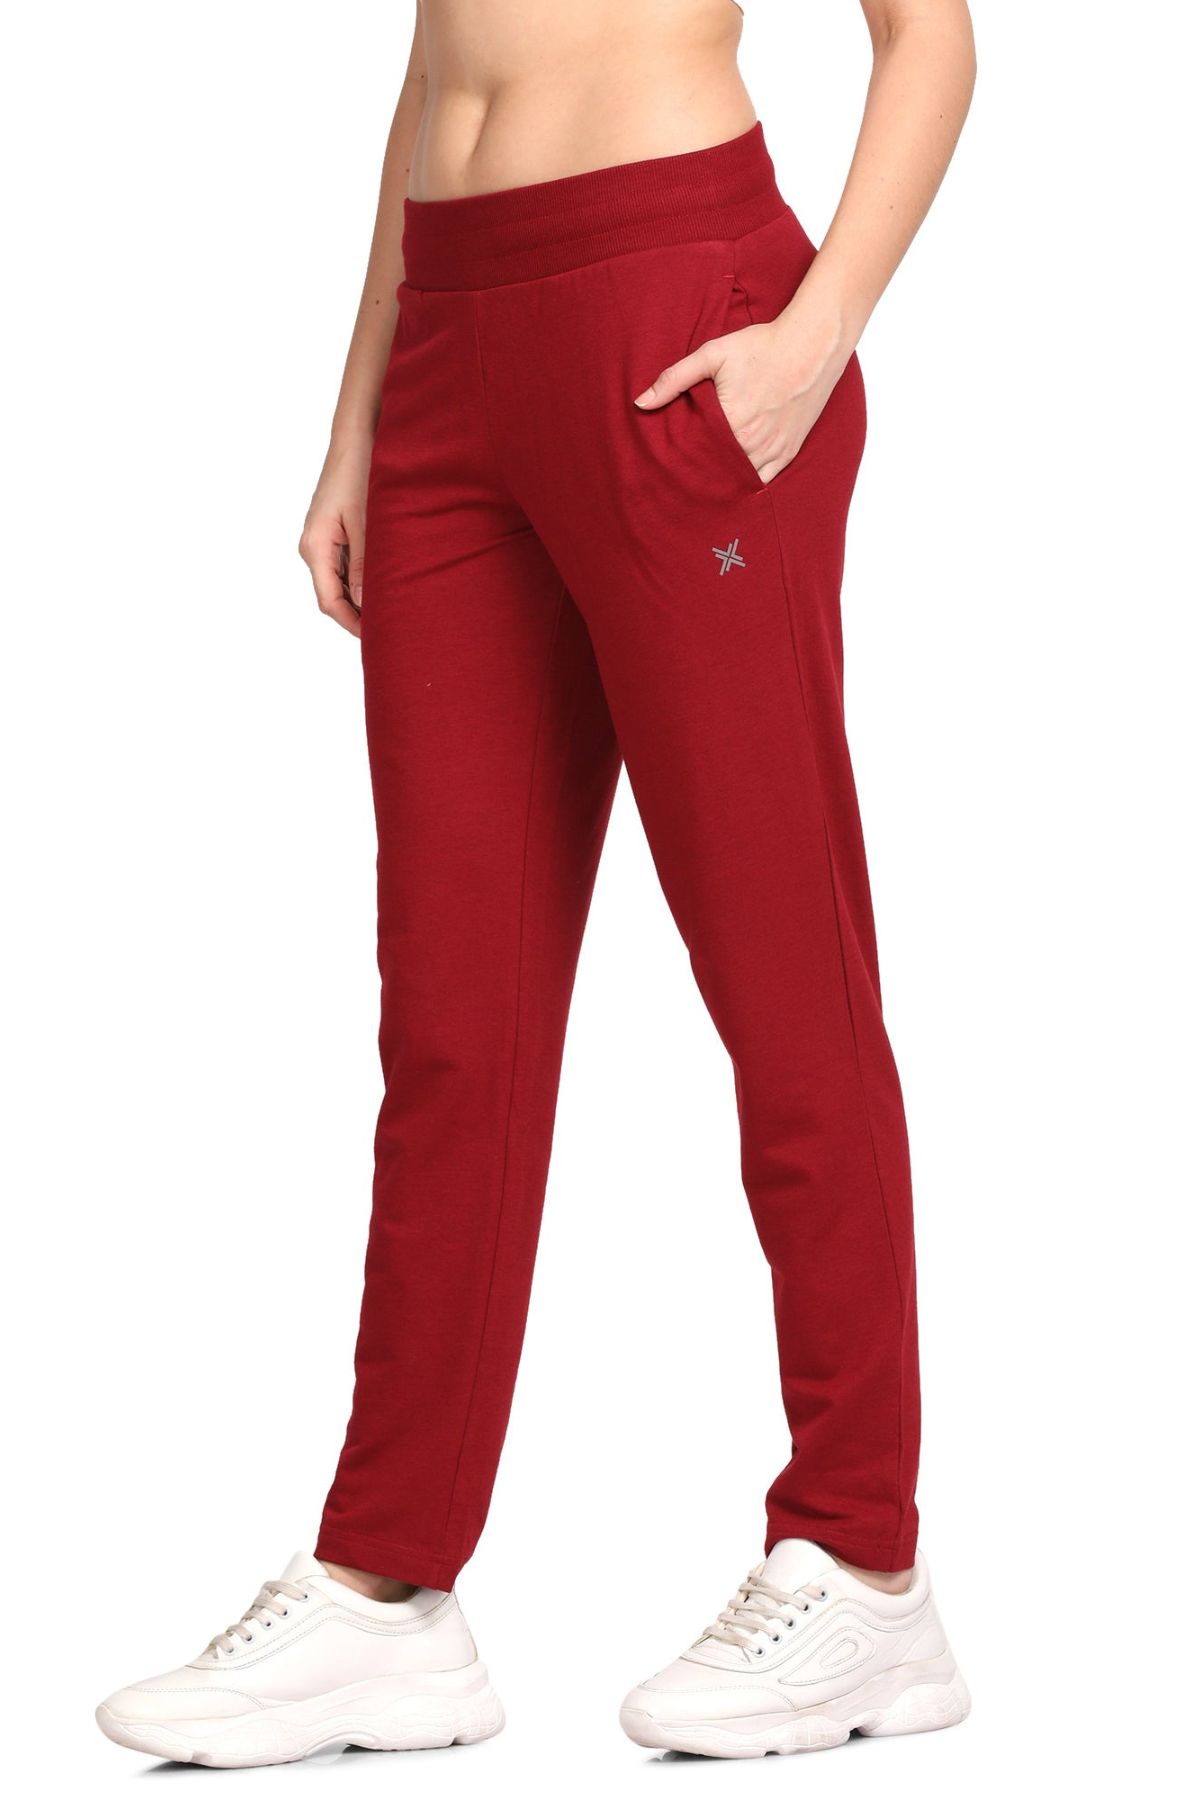 Love & Sports Women's Quilted Jogger Pants, 27” Inseam, Sizes XS-XXXL -  Walmart.com